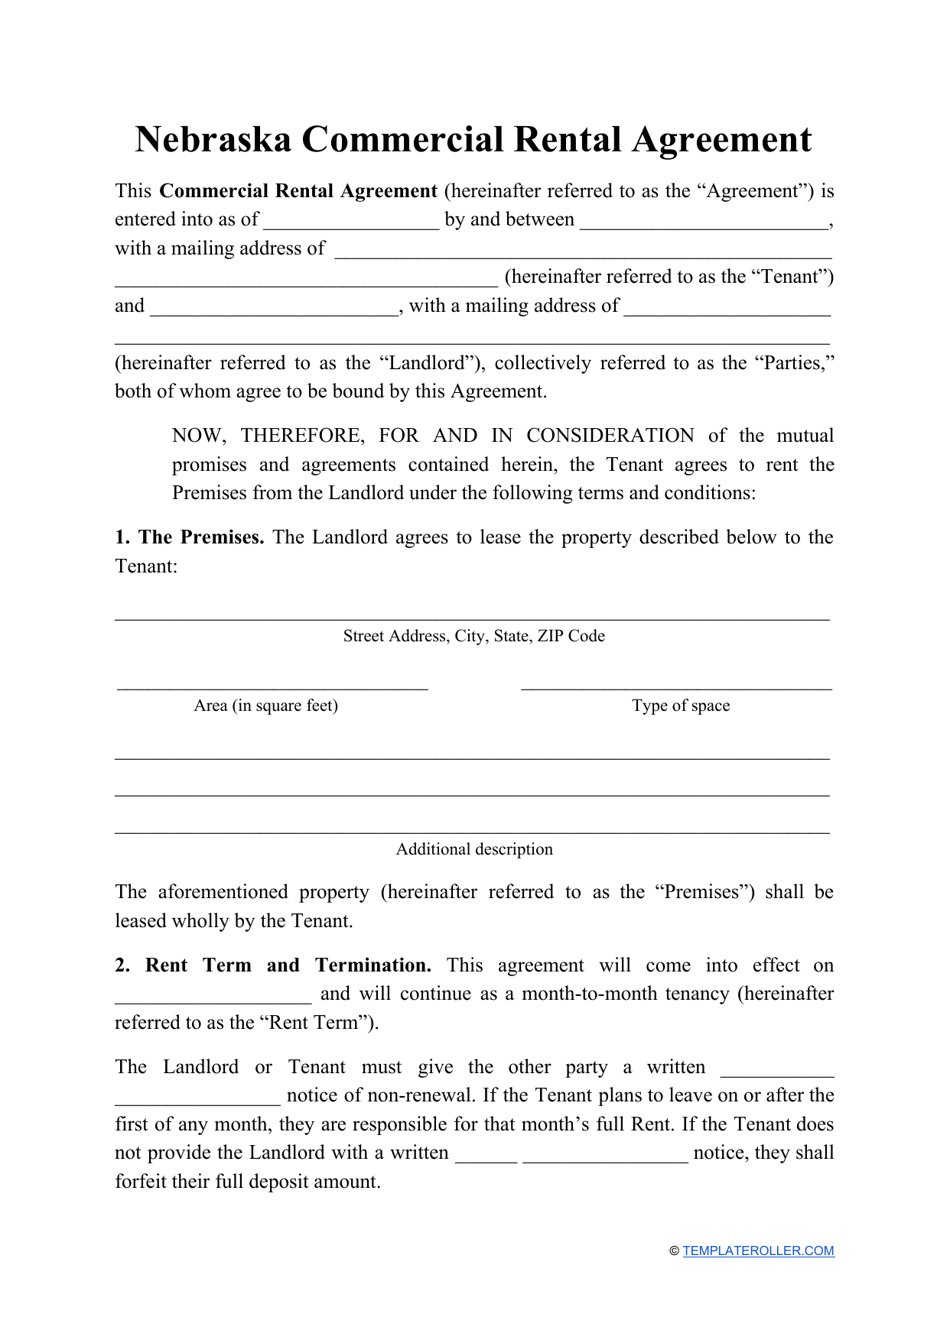 Commercial Rental Agreement Template - Nebraska, Page 1